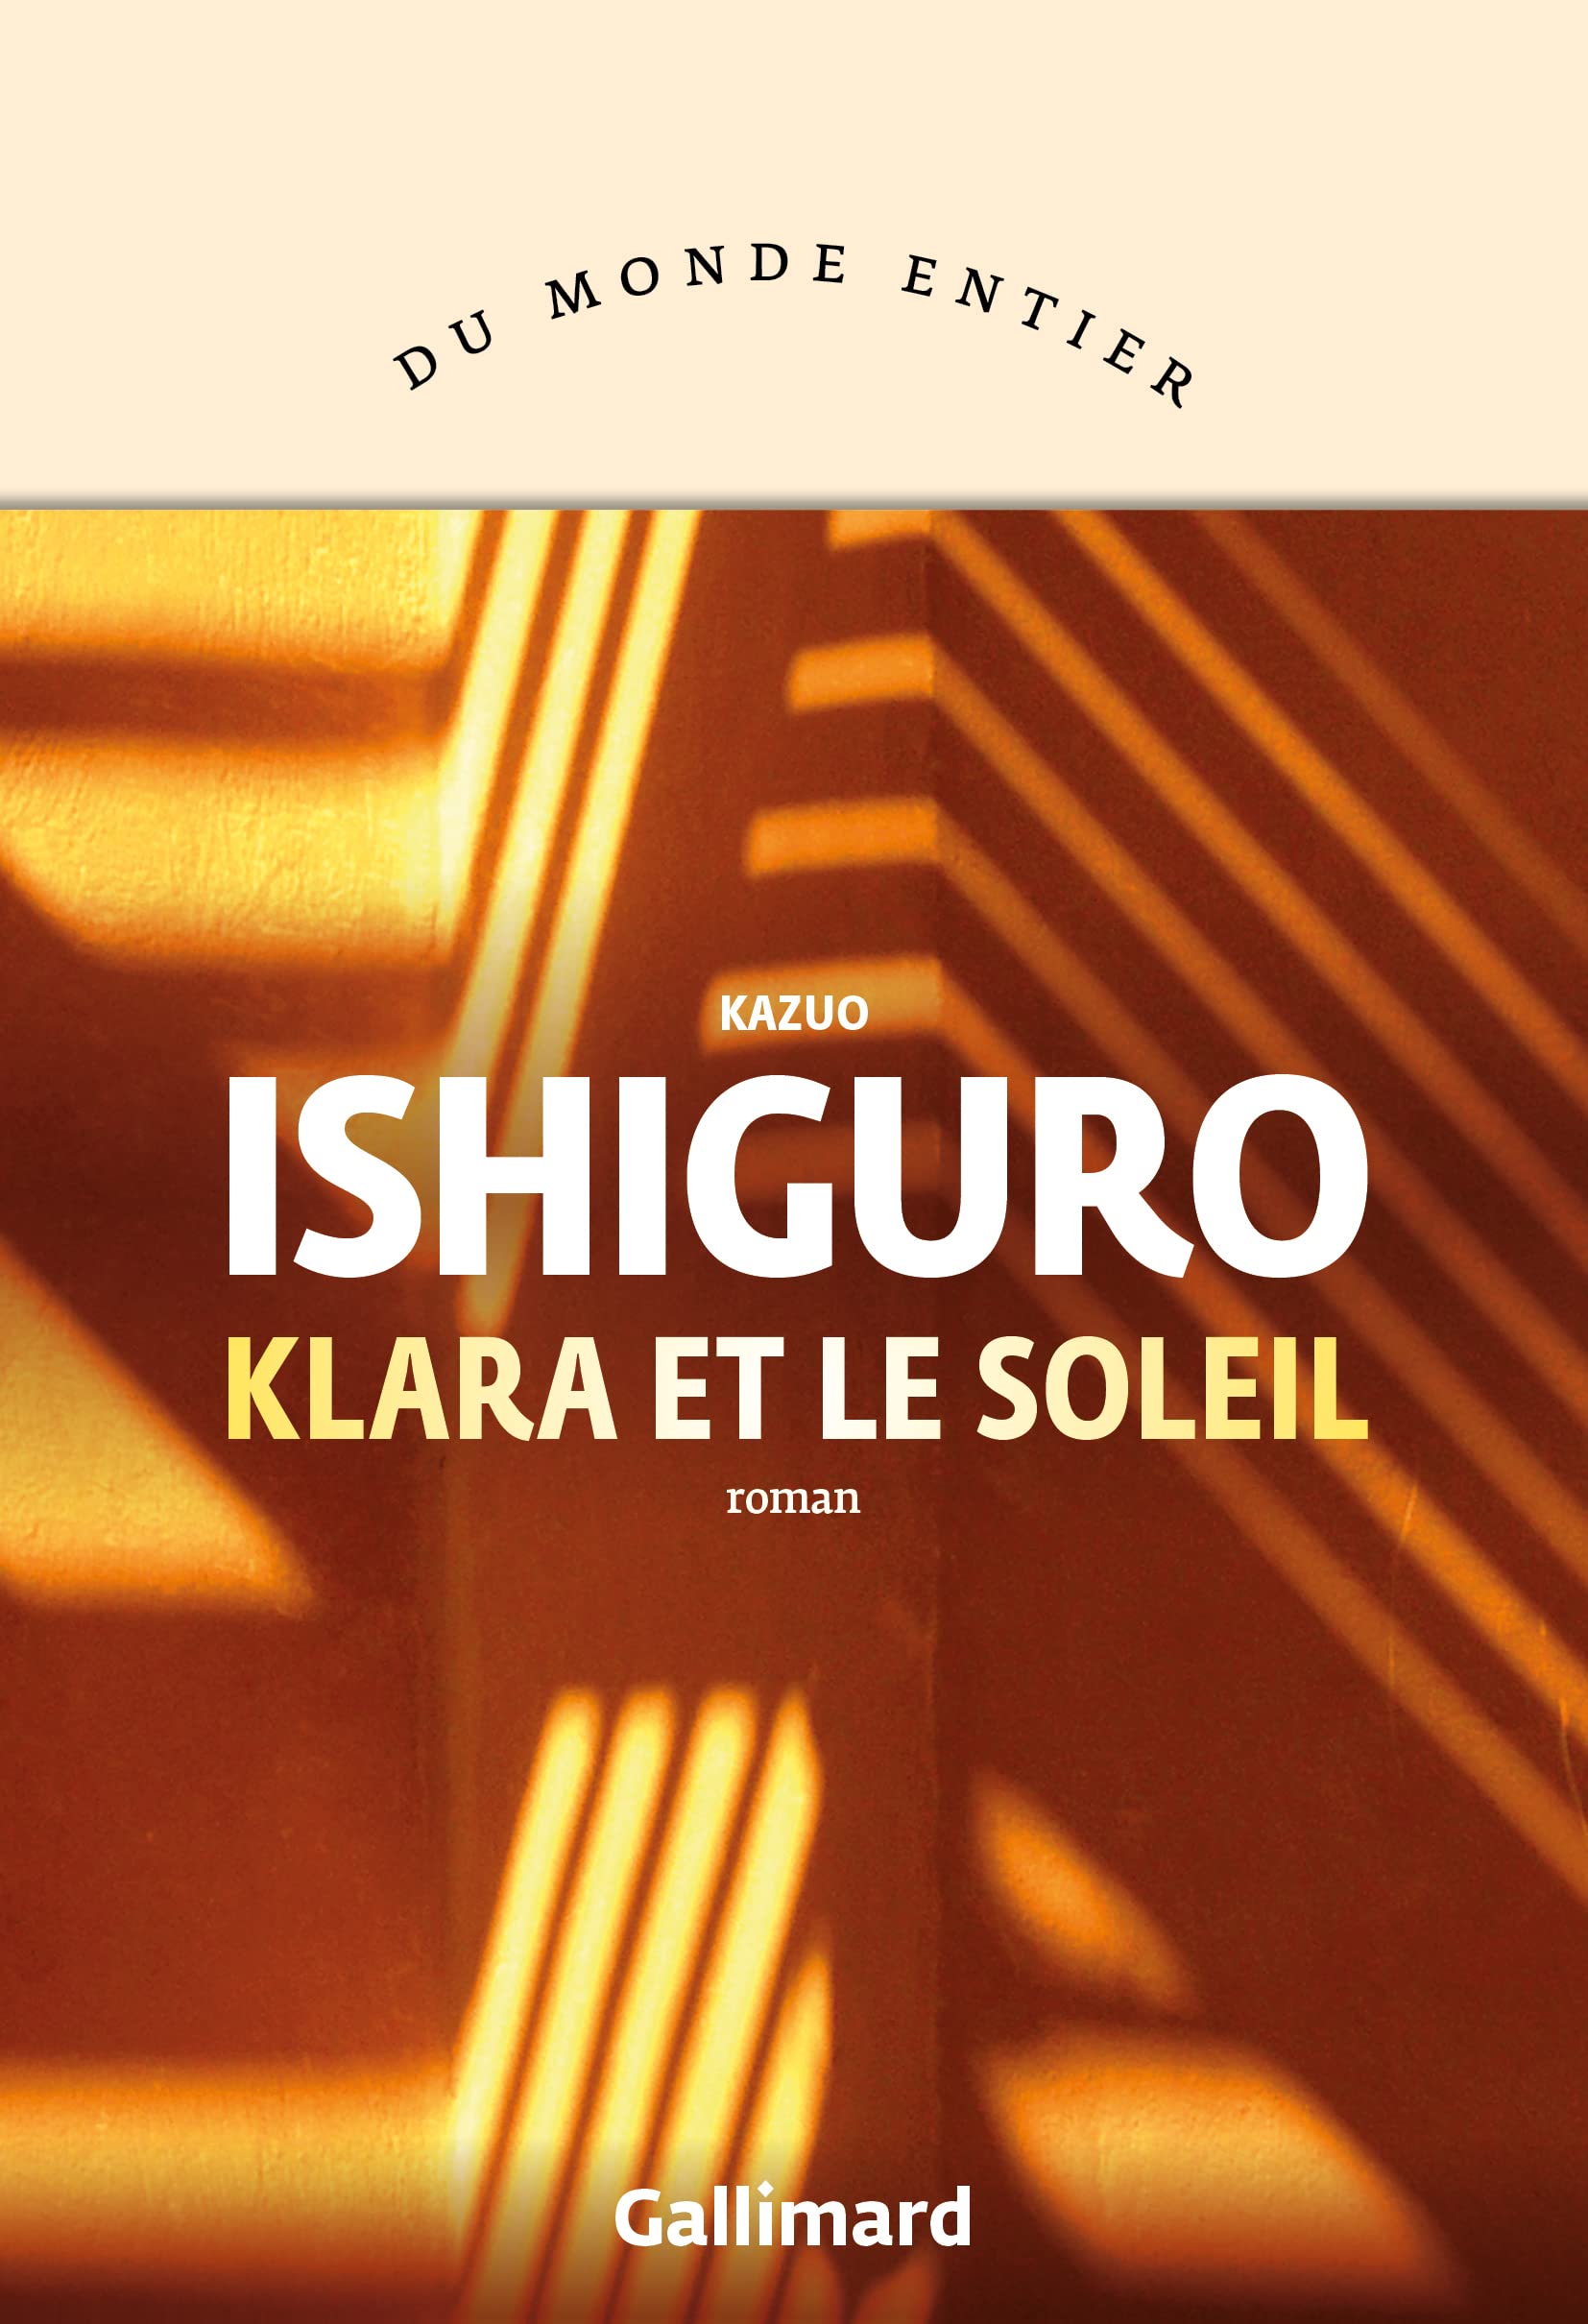 [Roman] « Klara et le soleil » de Kazuo Ishiguro